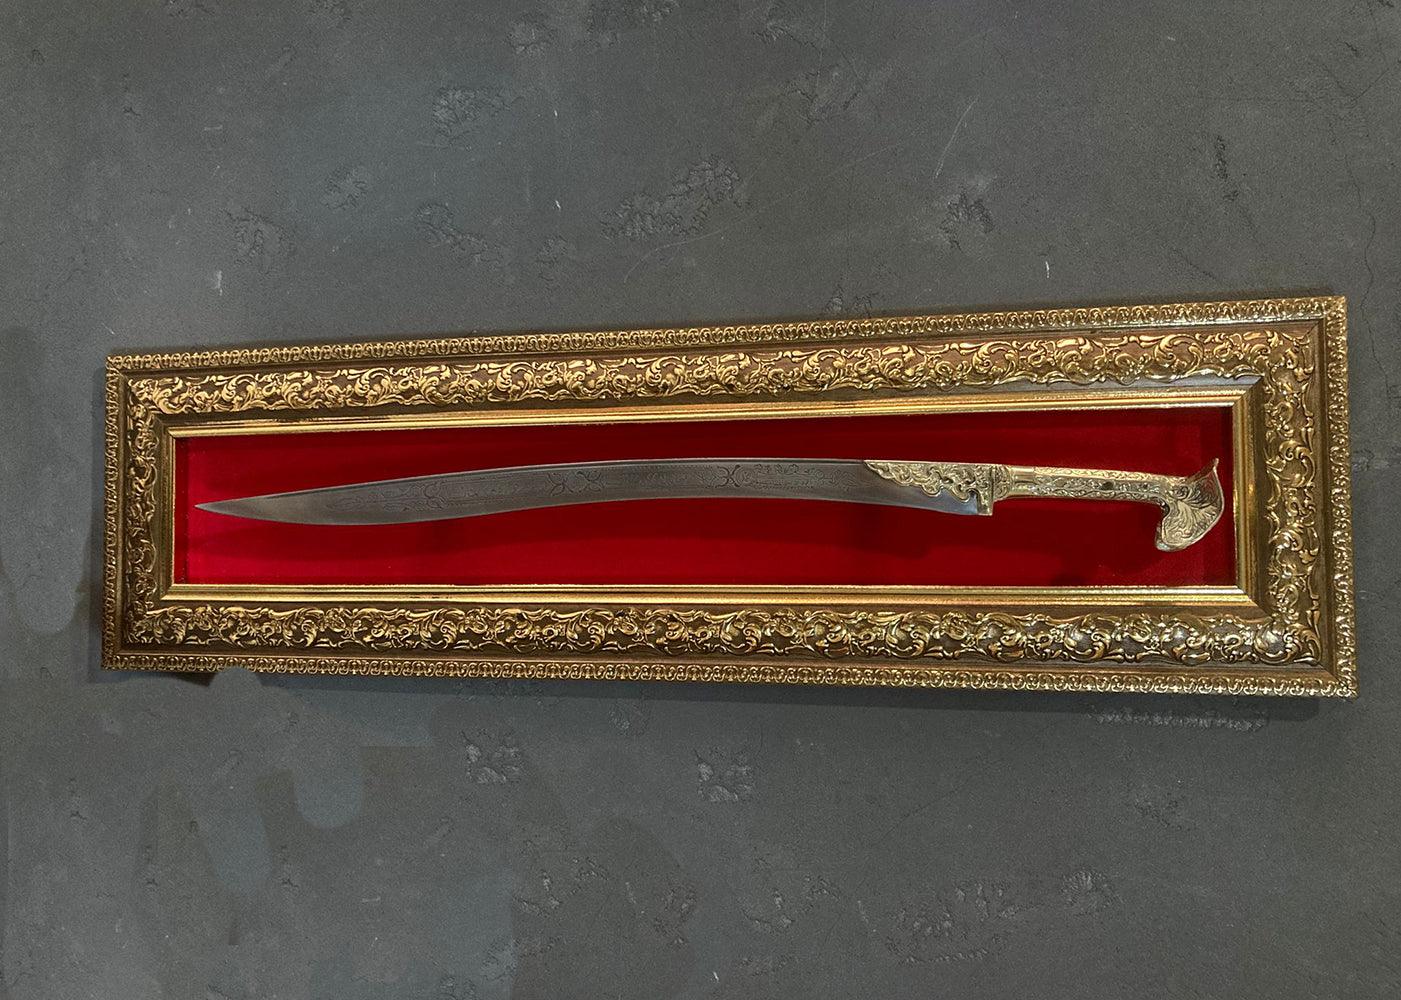 Yatağan Sword Wall Frame Stand - Ottoman Swords